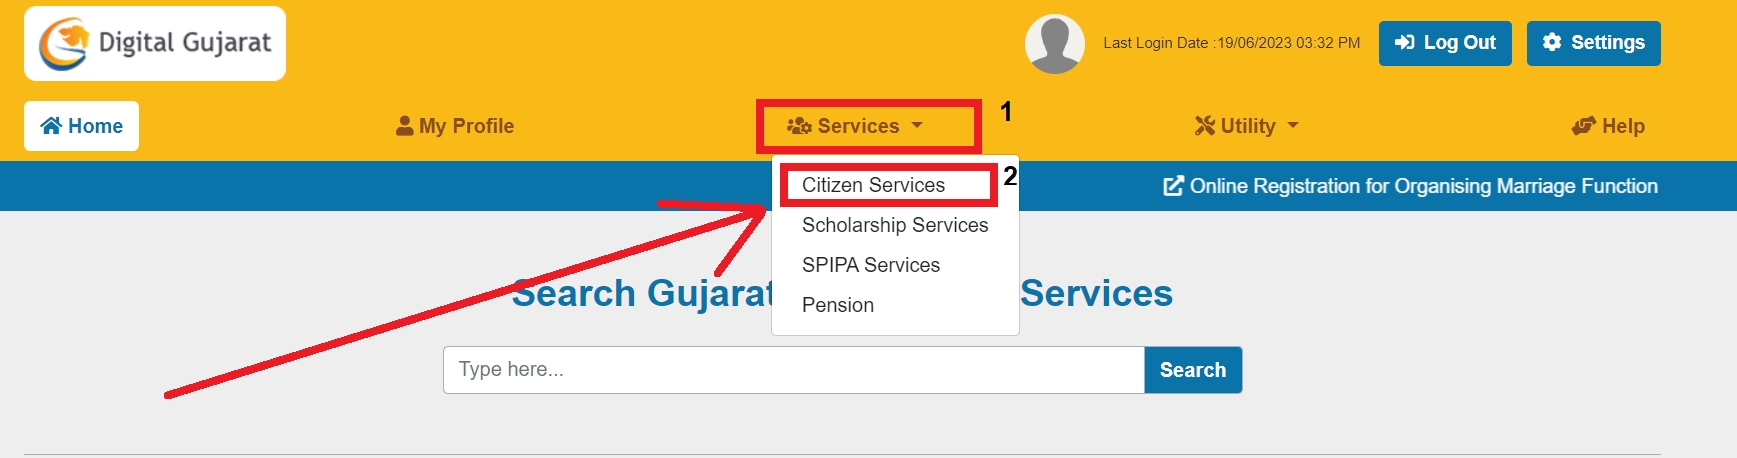 Digital Gujarat Online Services